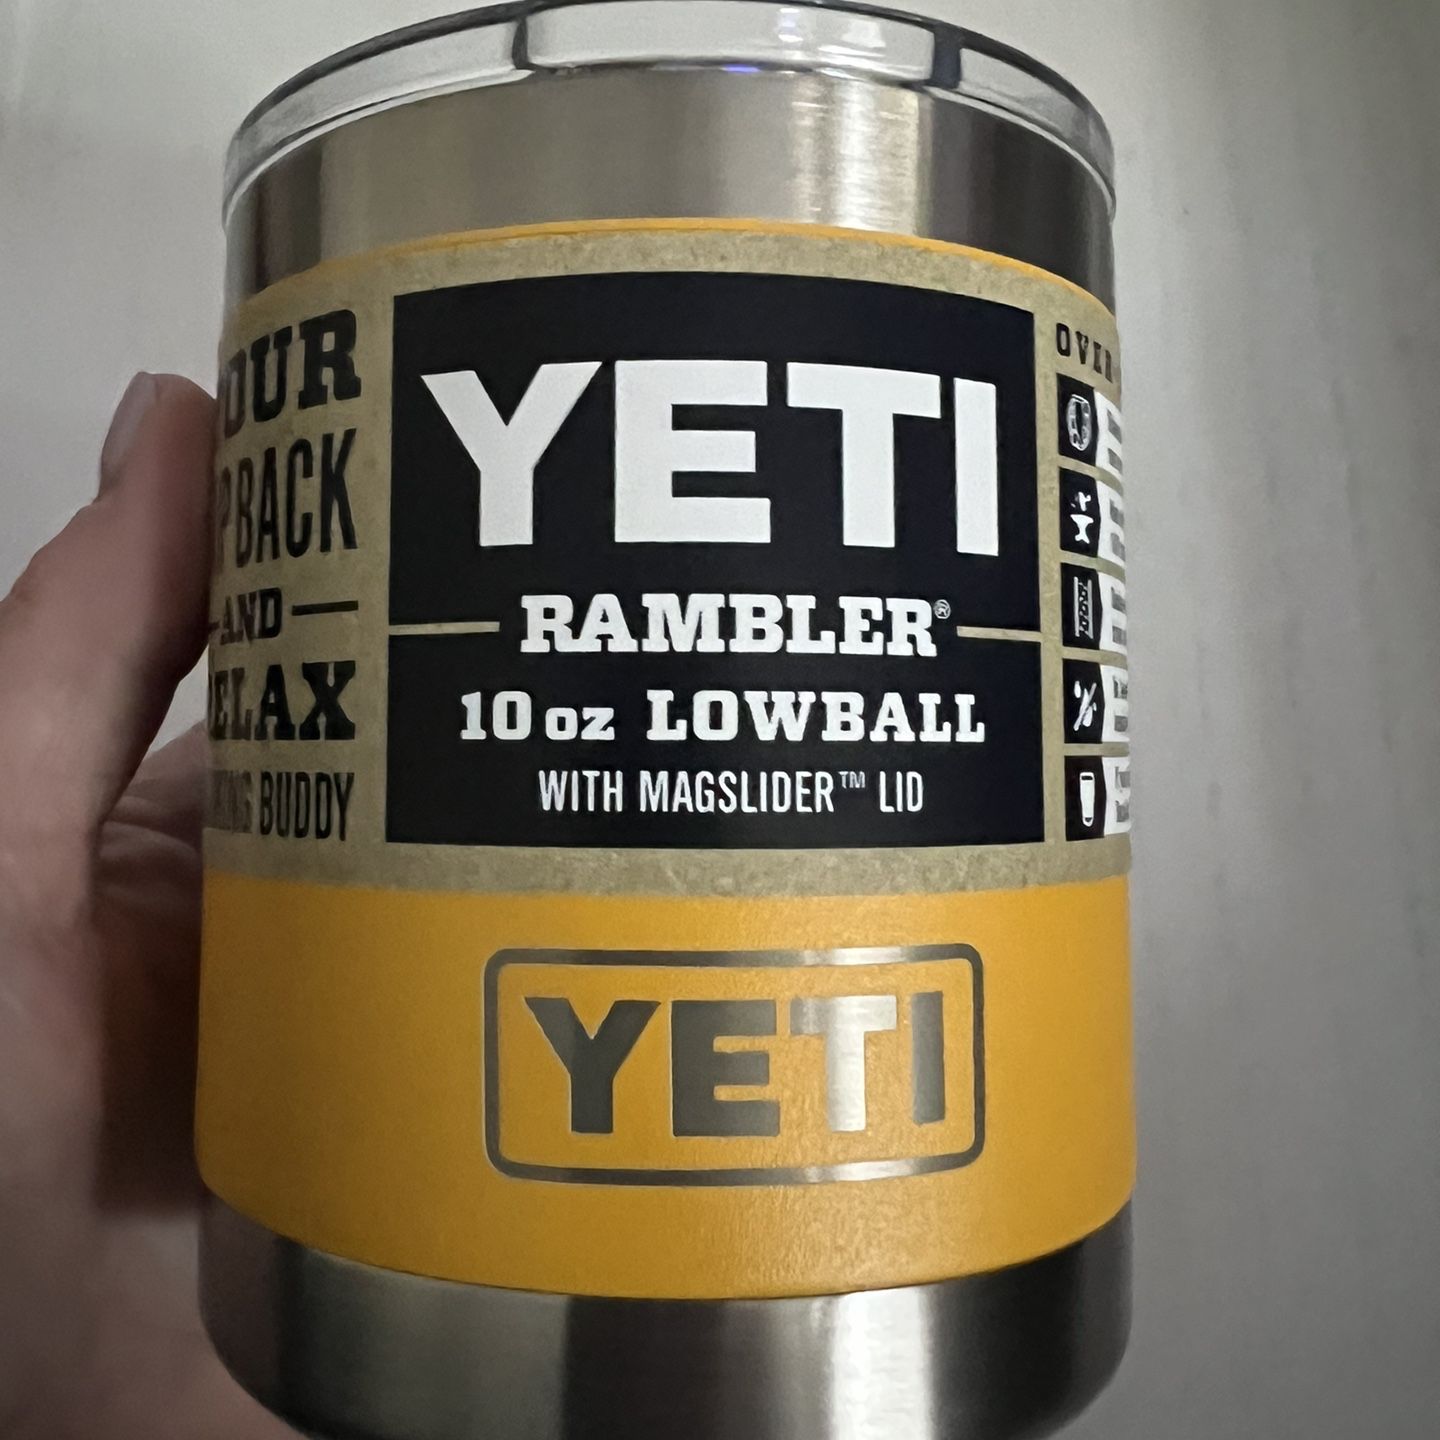 YETI Rambler 10 oz Alpine Yellow Lowball with Magslider Lid